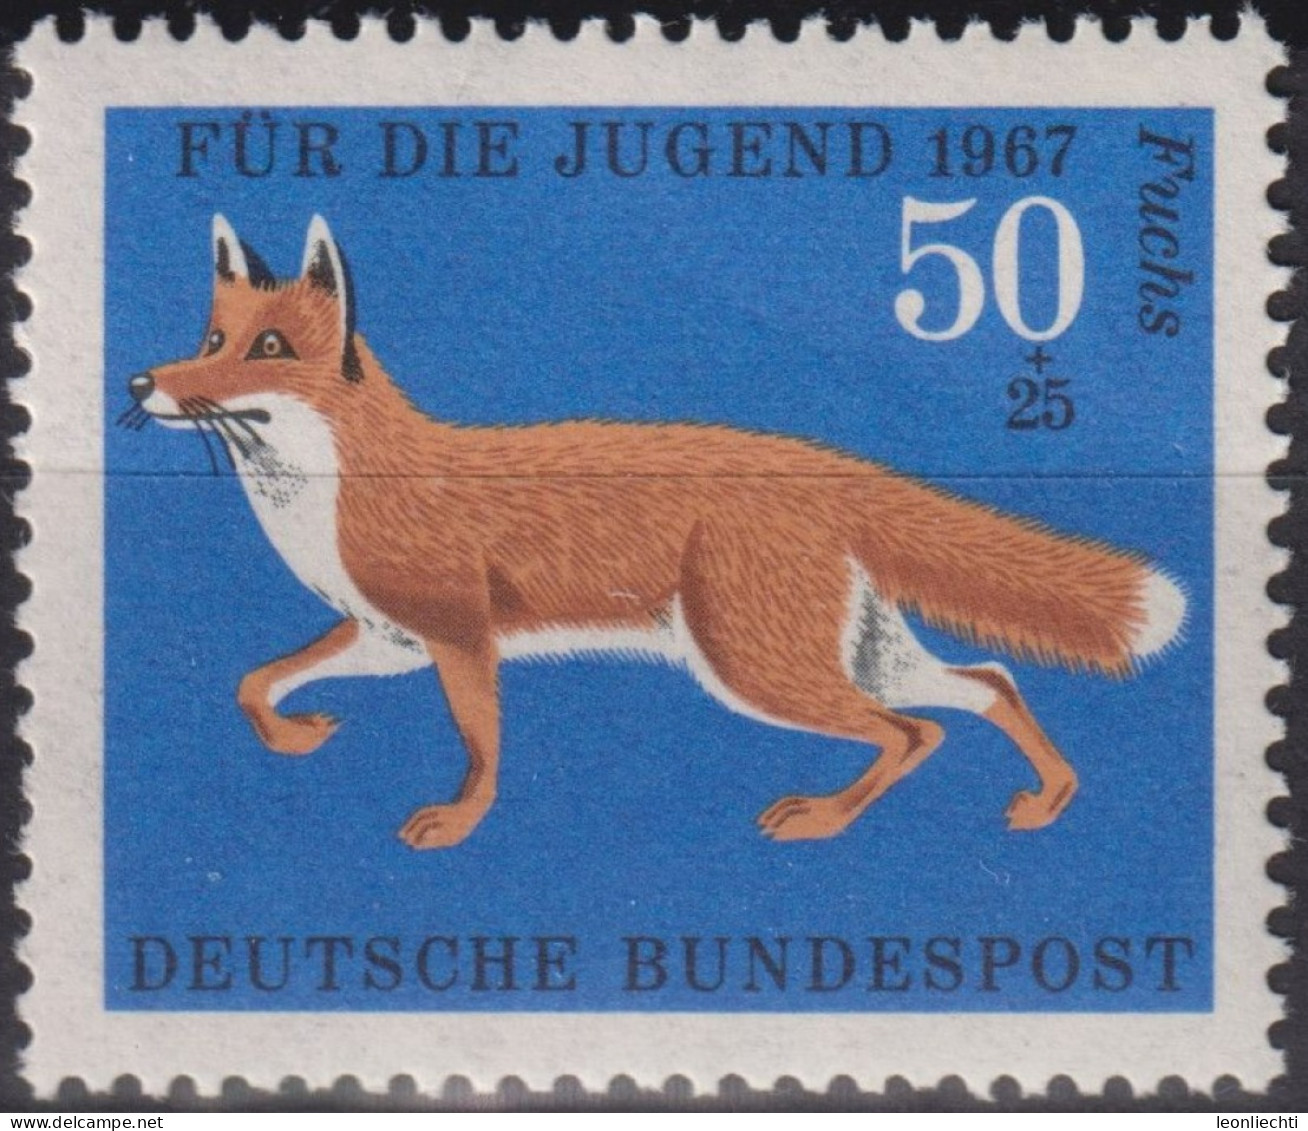 1967 Deutschland > BRD, ** Mi:DE 532, Sn:DE B425, Yt:DE 390, Fuchs, Red Fox (Vulpes Vulpes) - Wild